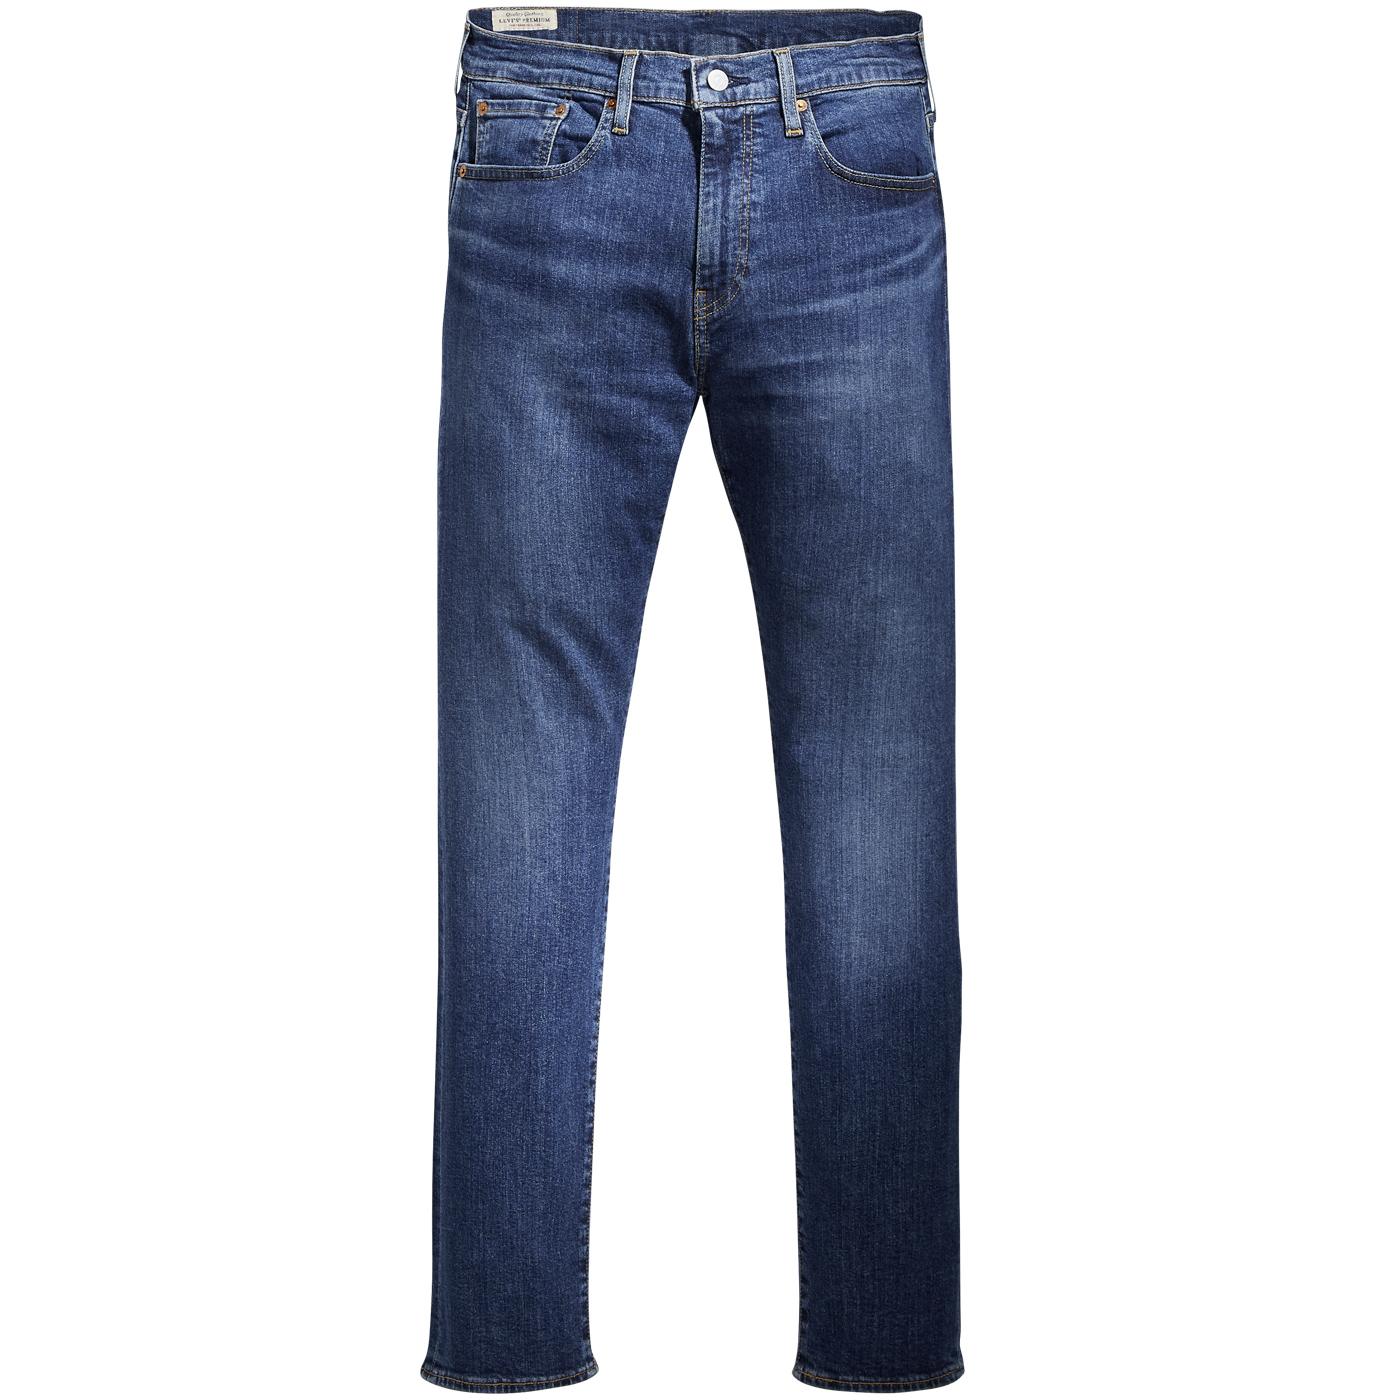 LEVI'S 502 Taper Men's Retro Mod Jeans (Wagu Moss)